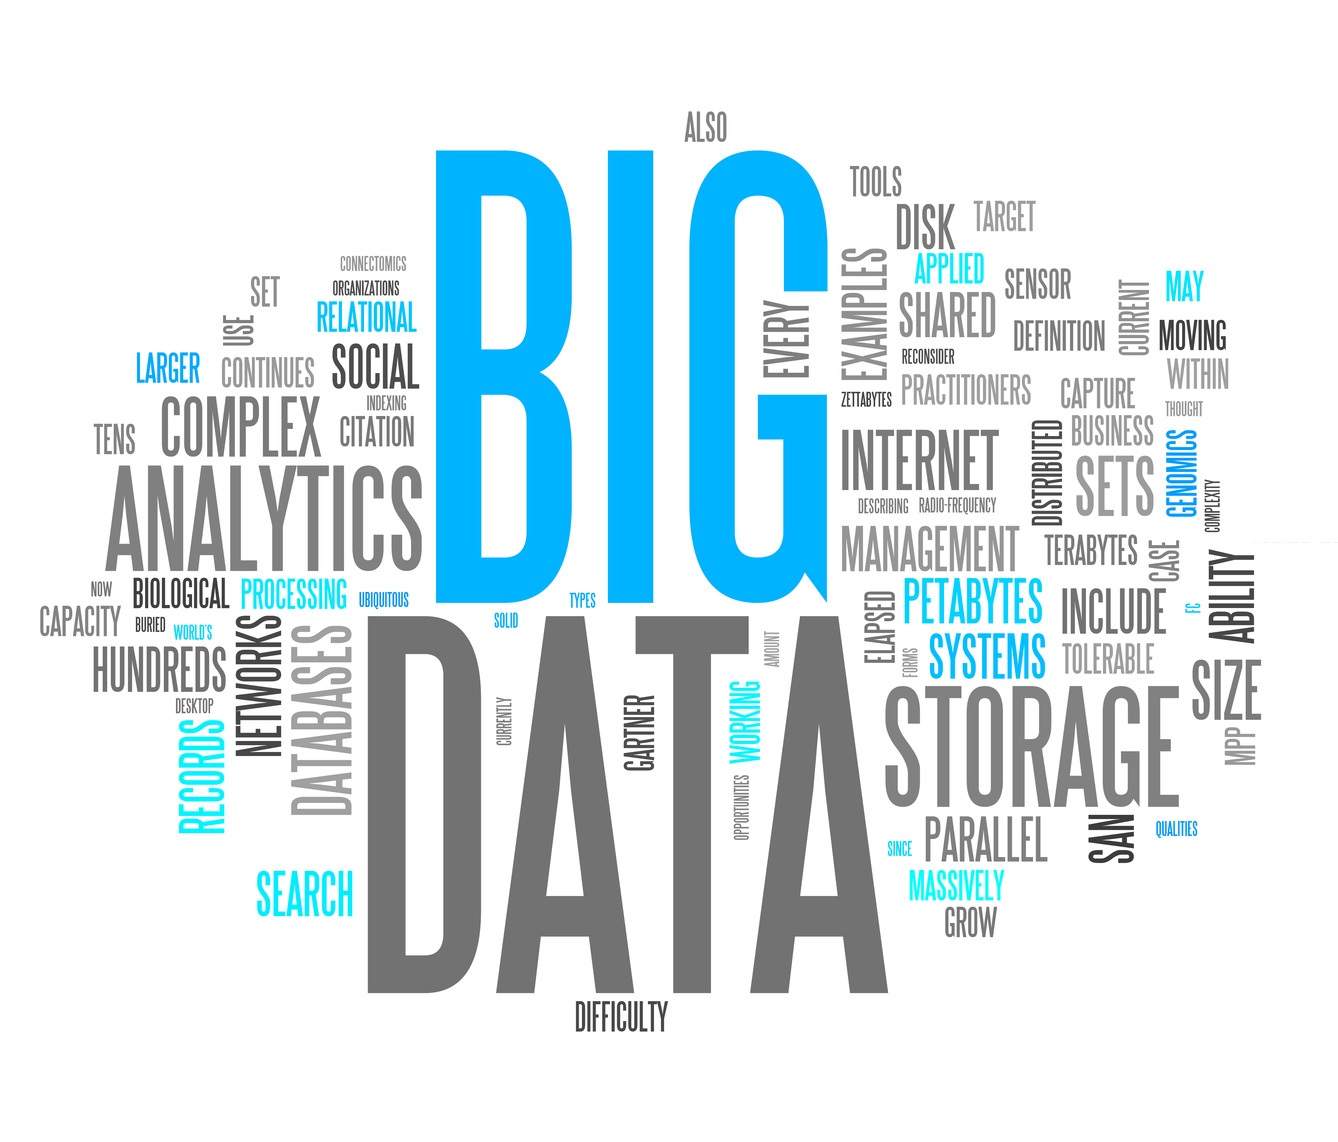 Big-Data/Hadoop